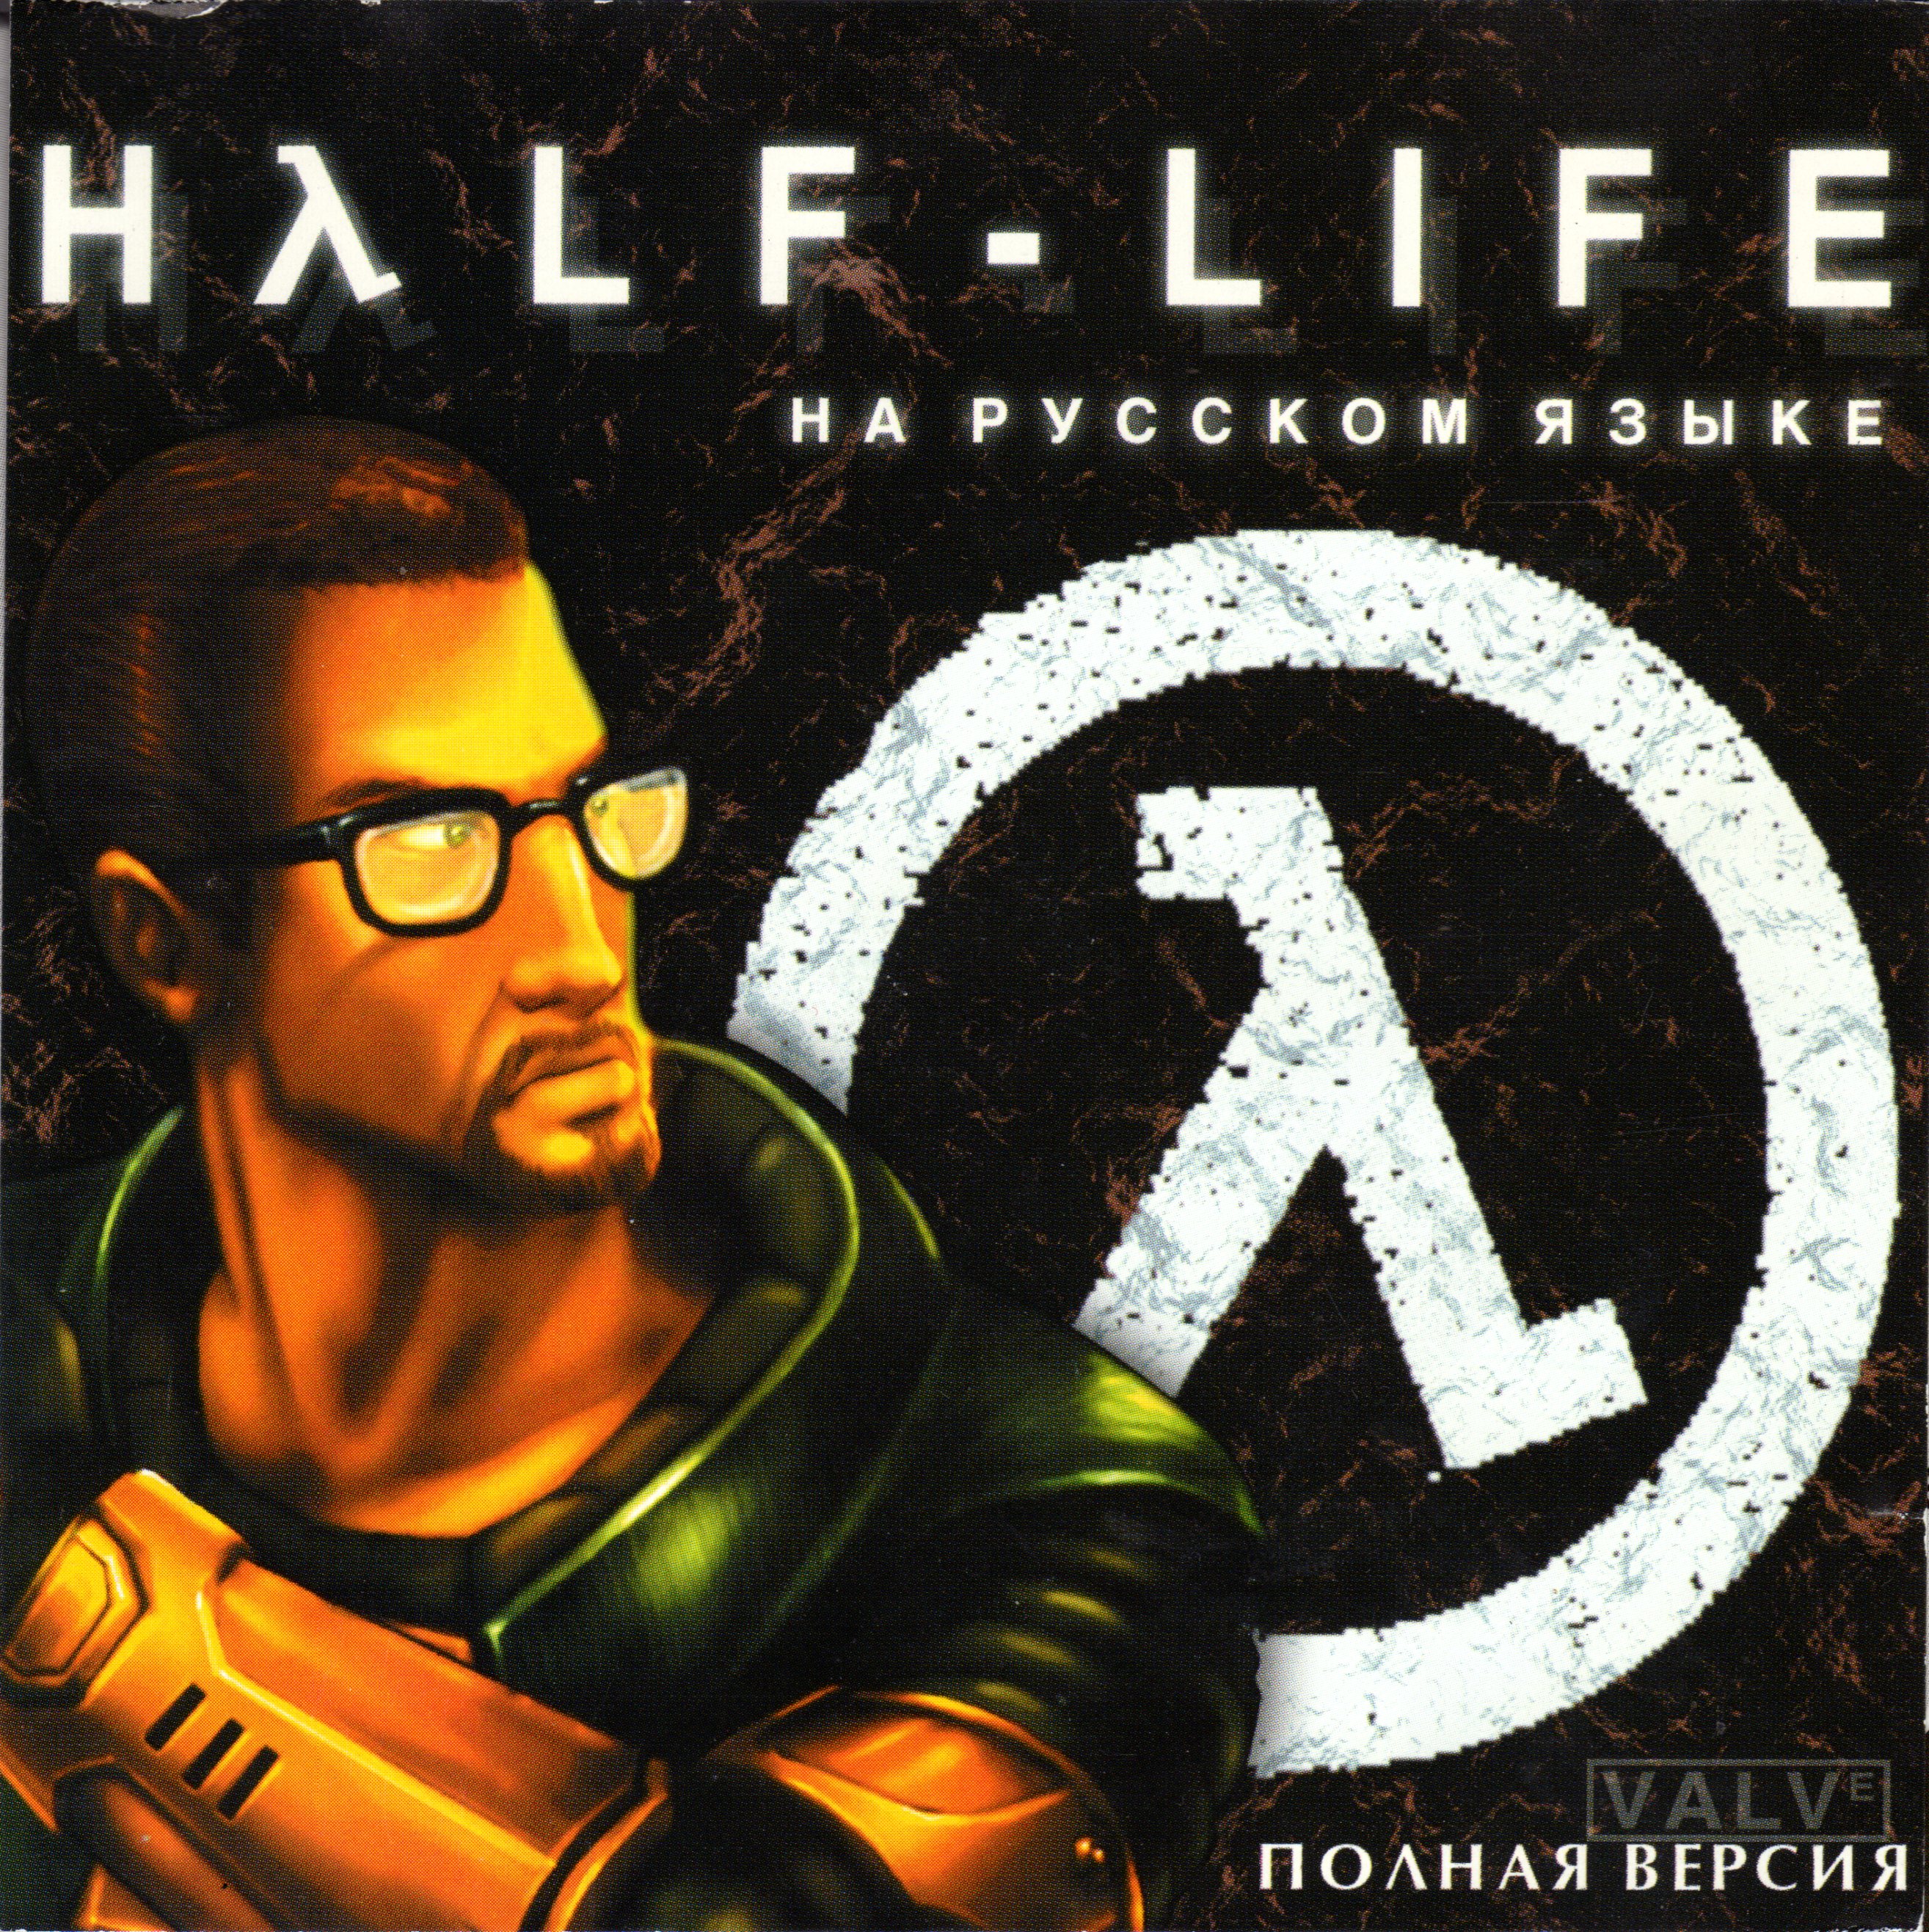 Half life dreamcast